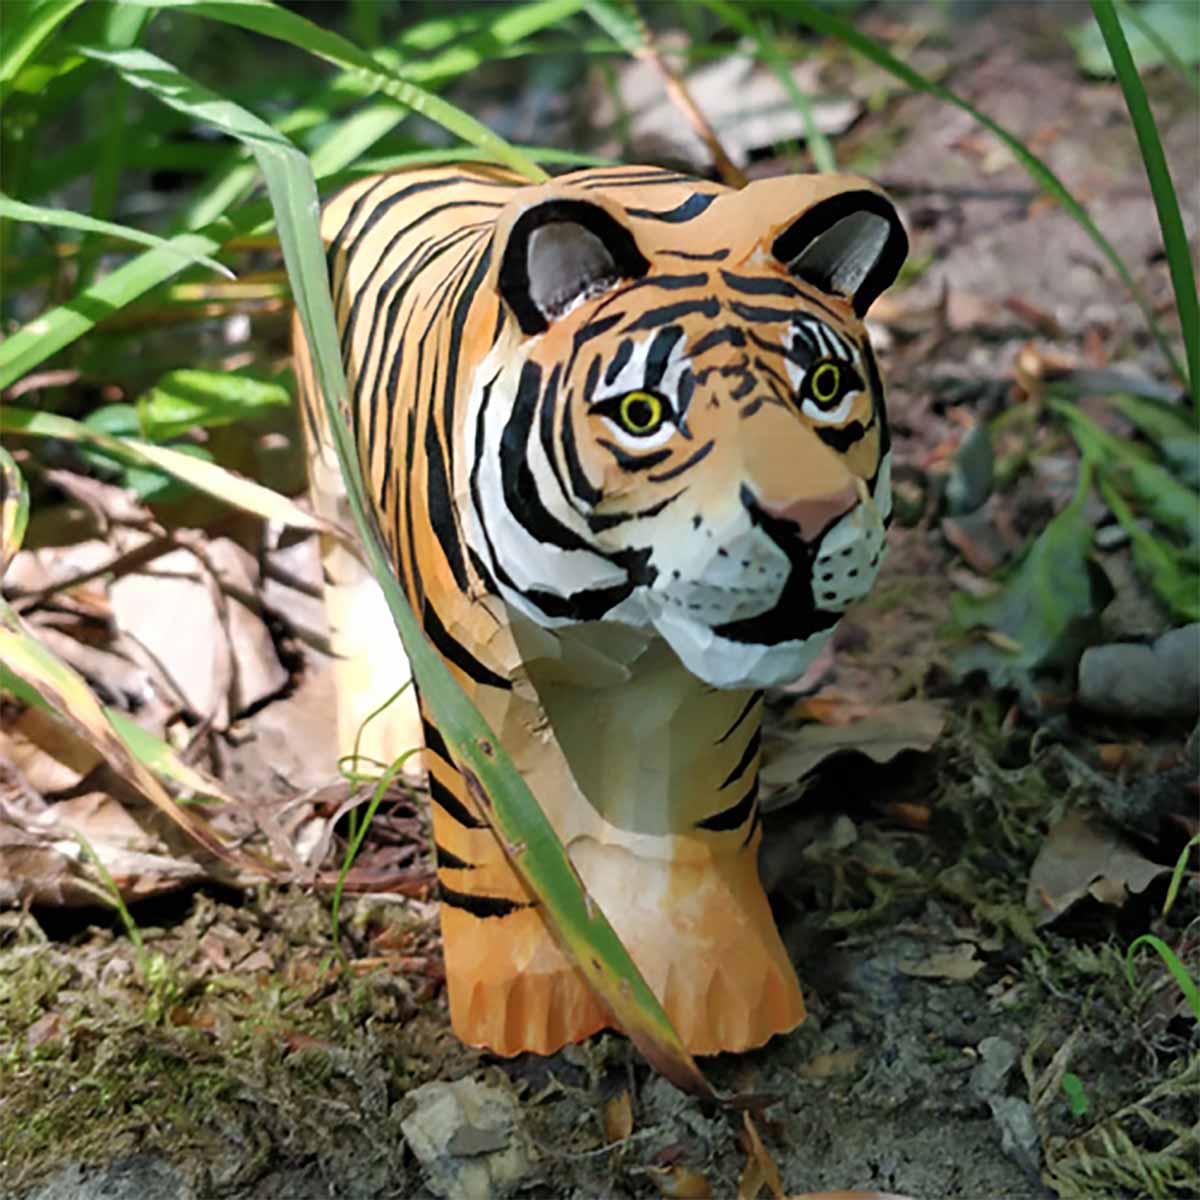 Wudimals Wooden Animal - Tiger